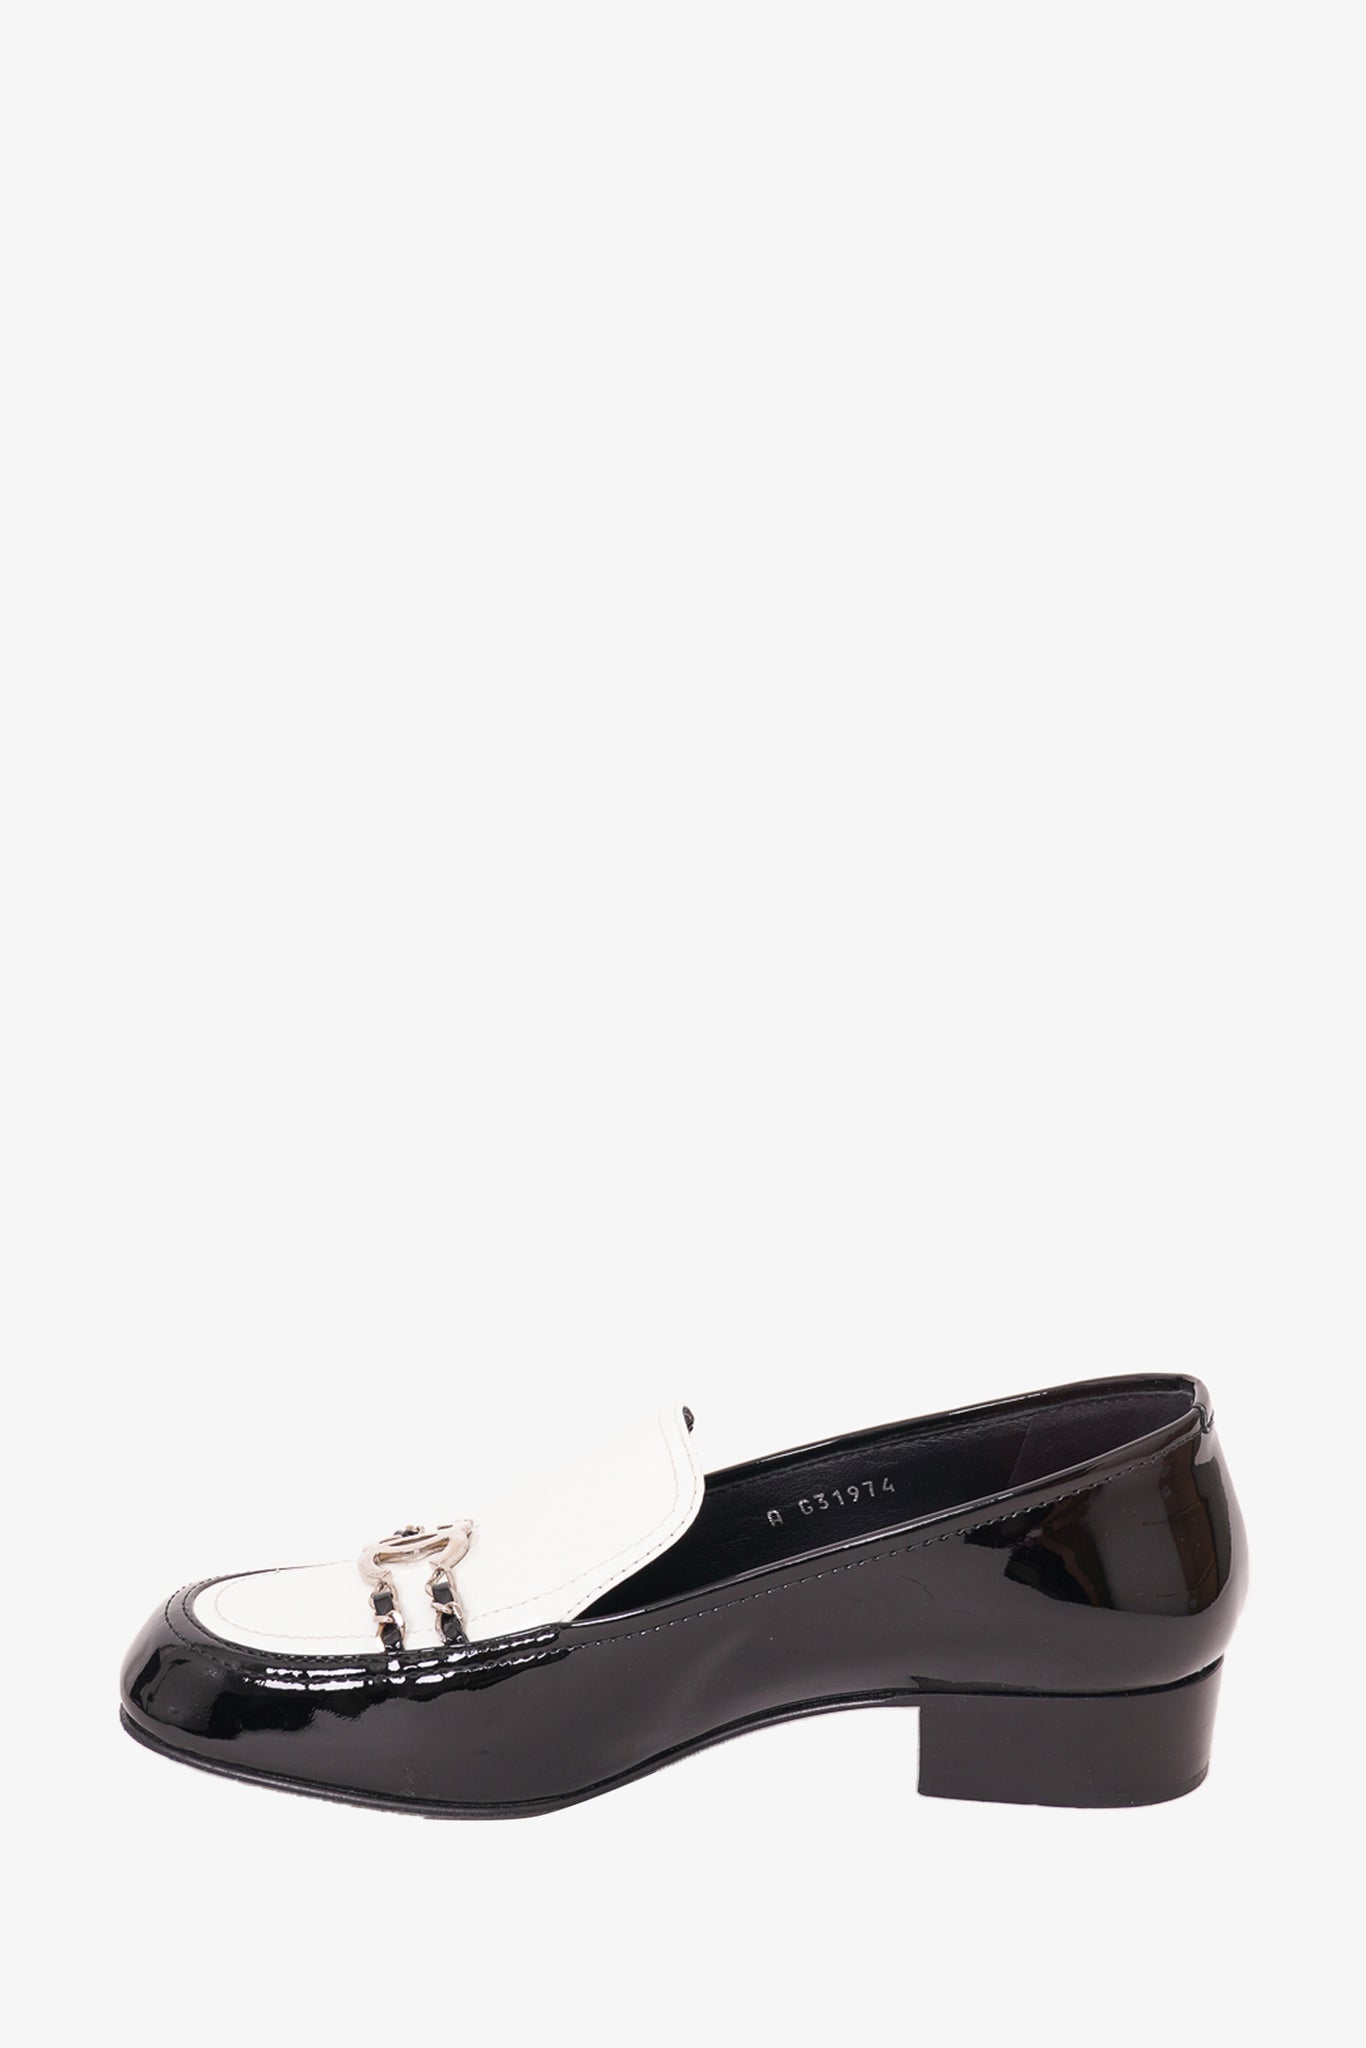 Chanel 2016 Black/White Patent Interlocking CC Logo Loafers Size 38.5